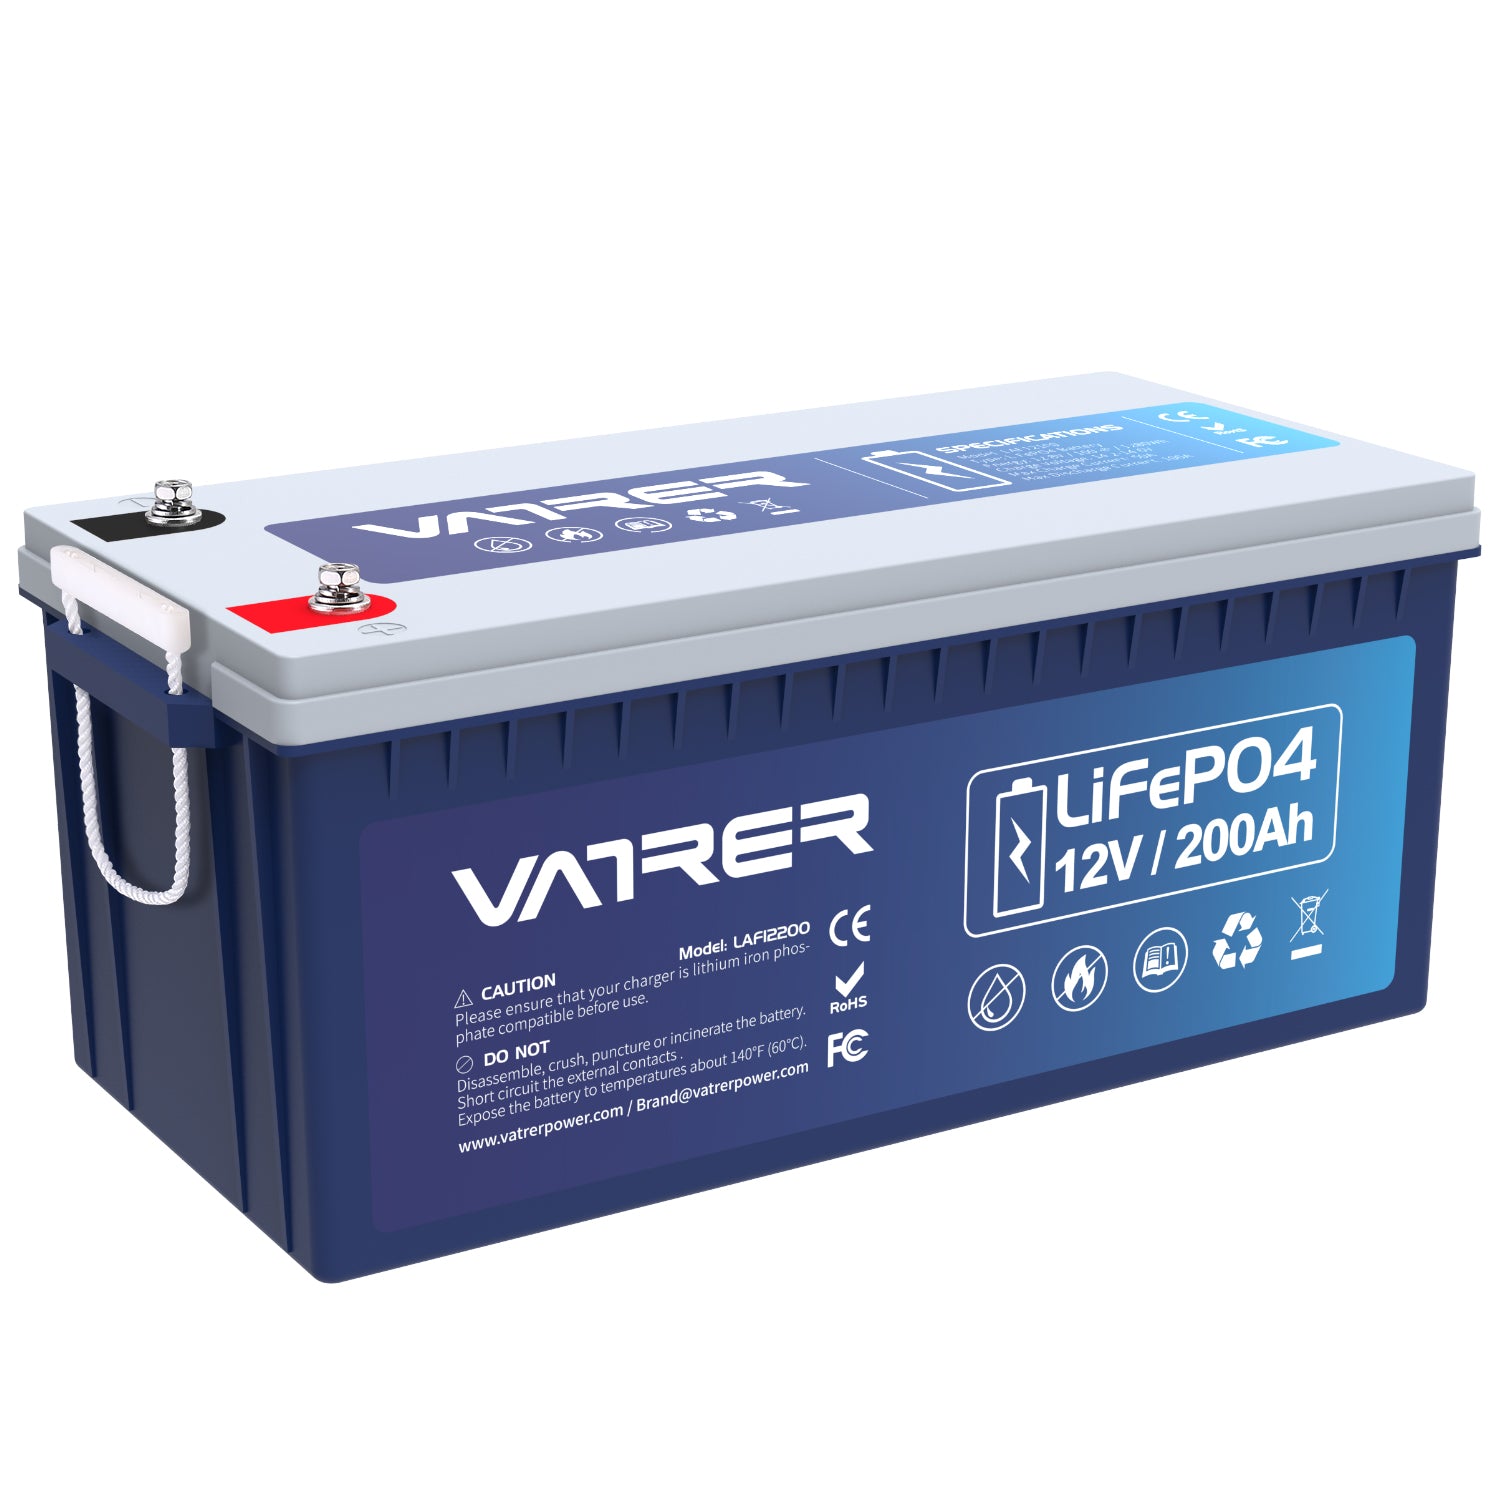 Vatrer 12V 200Ah 100A BMS Low Temp Cutoff LiFePO4 Lithium Battery 12